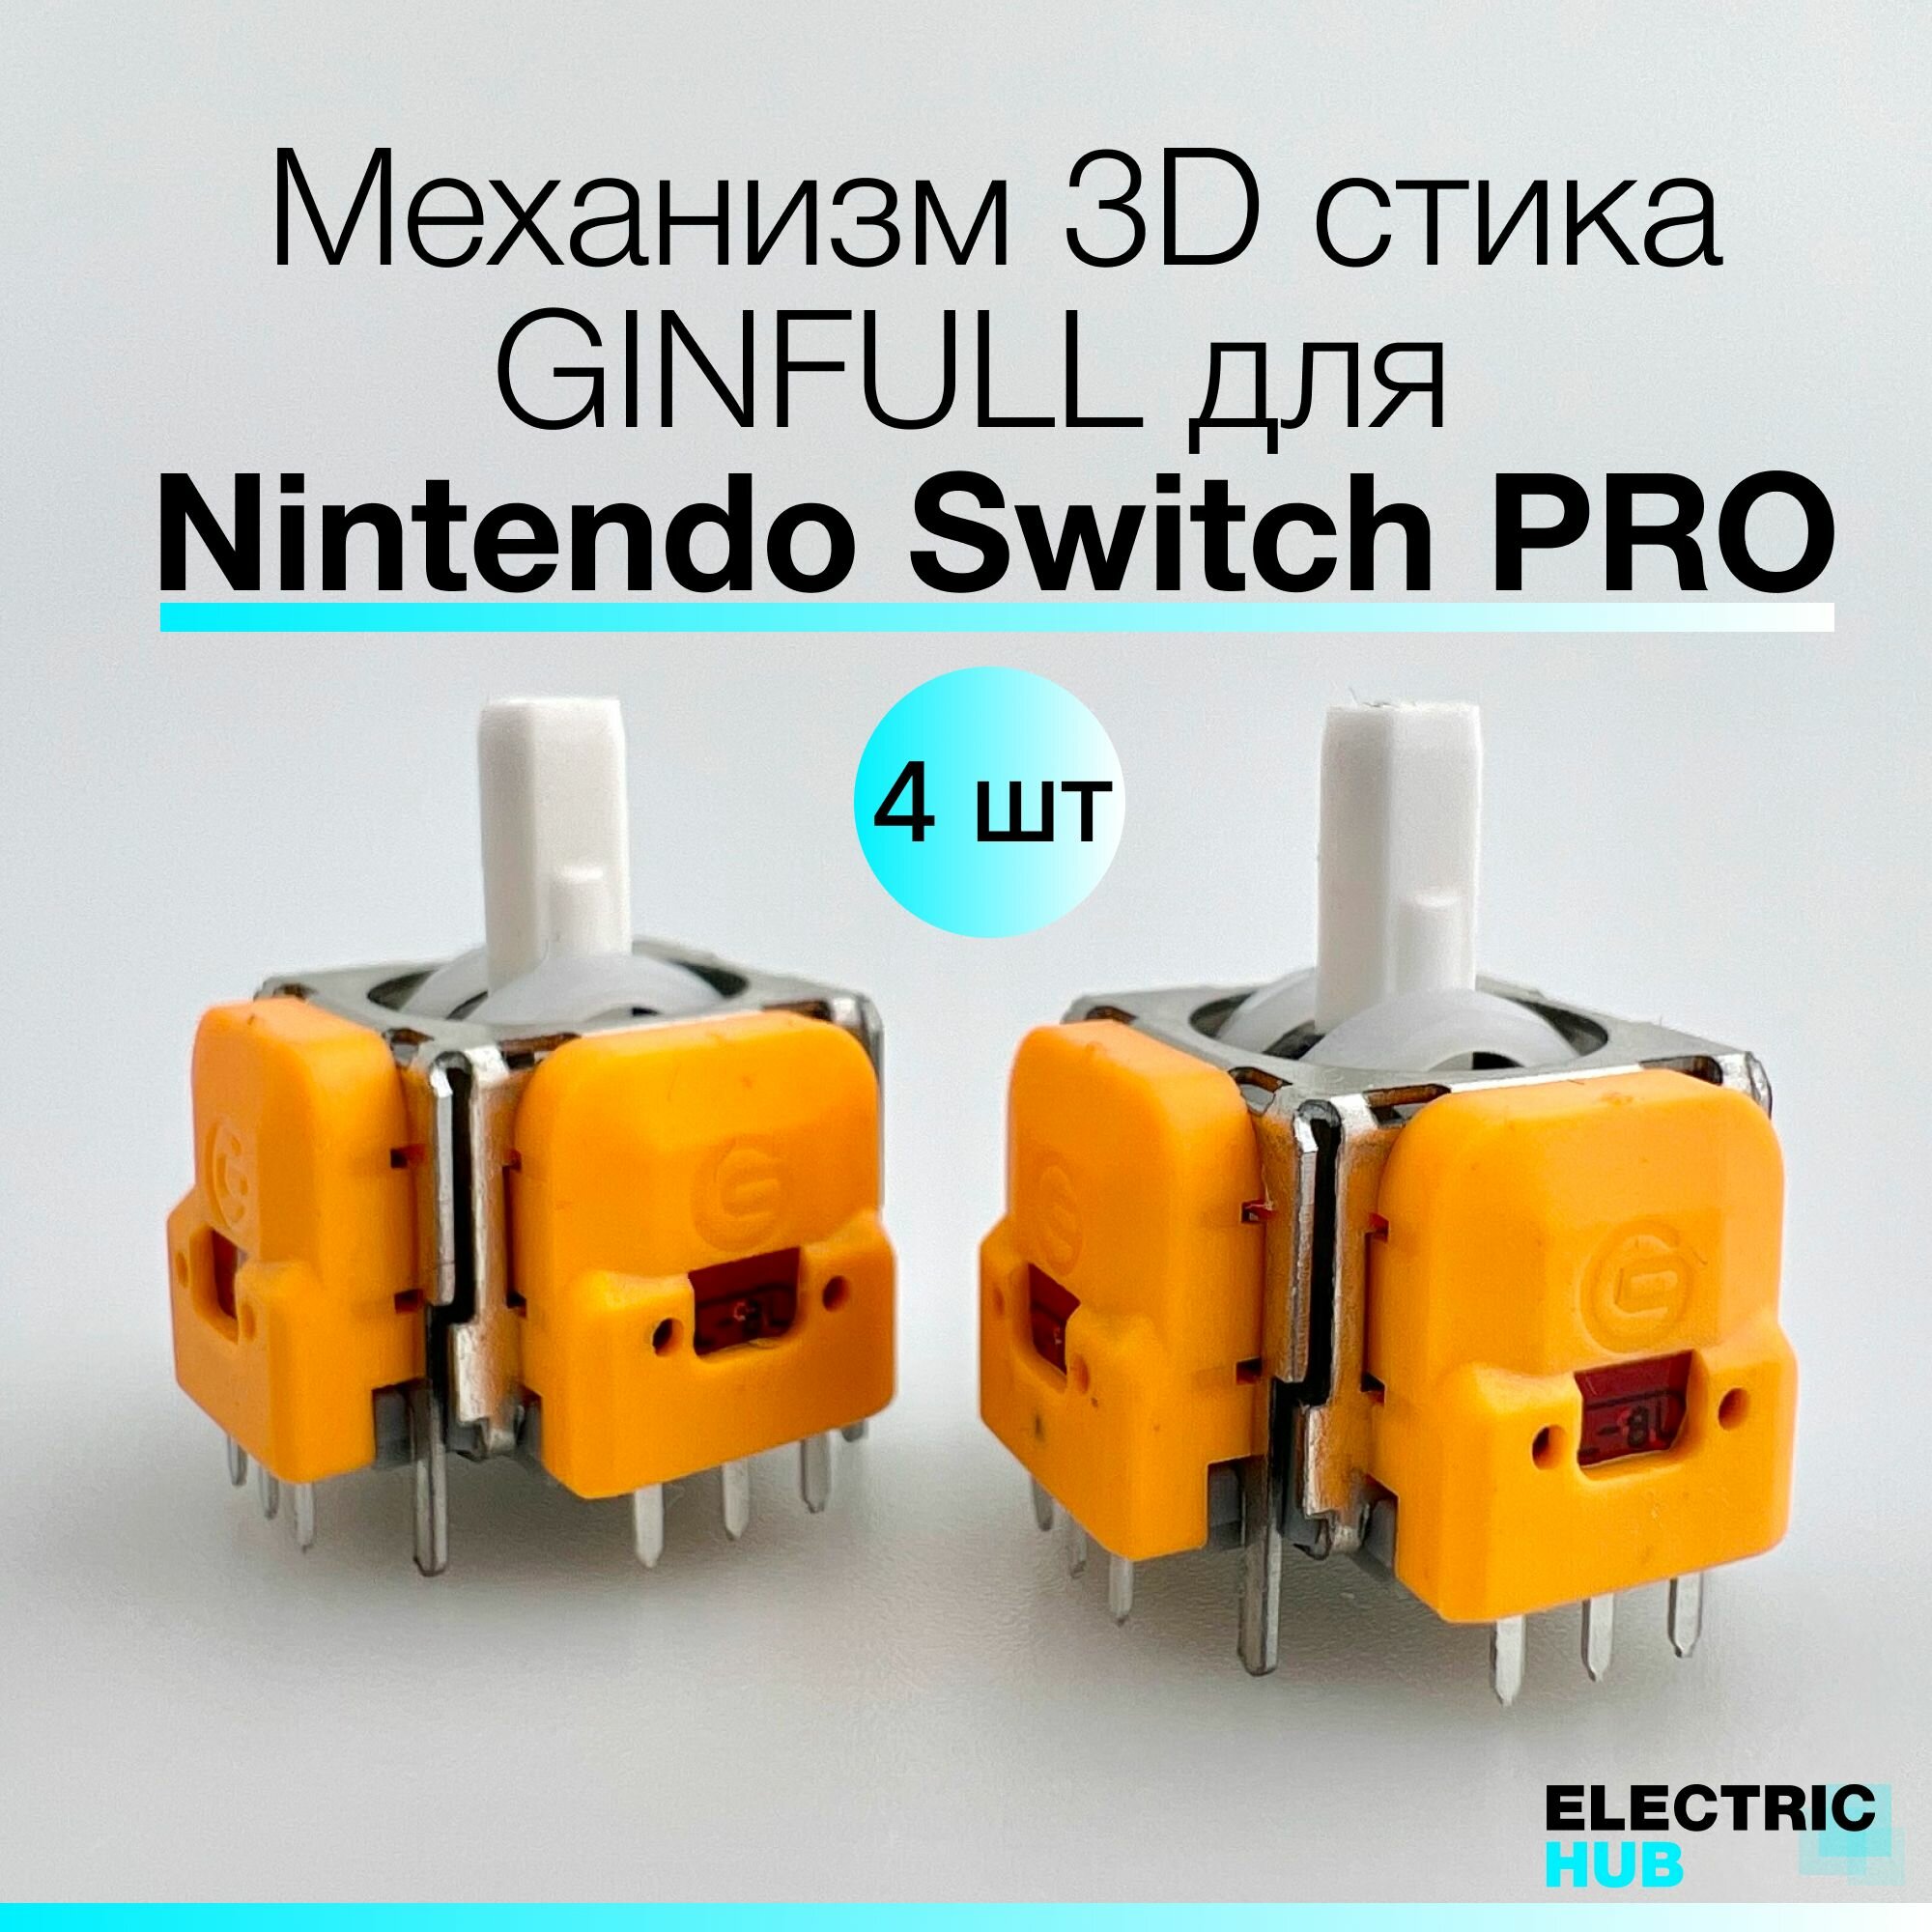 Механизм 3D стика GINFULL для Nintendo Switch PRO с датчиком Холла для ремонта джойстика/геймпада 4 шт.